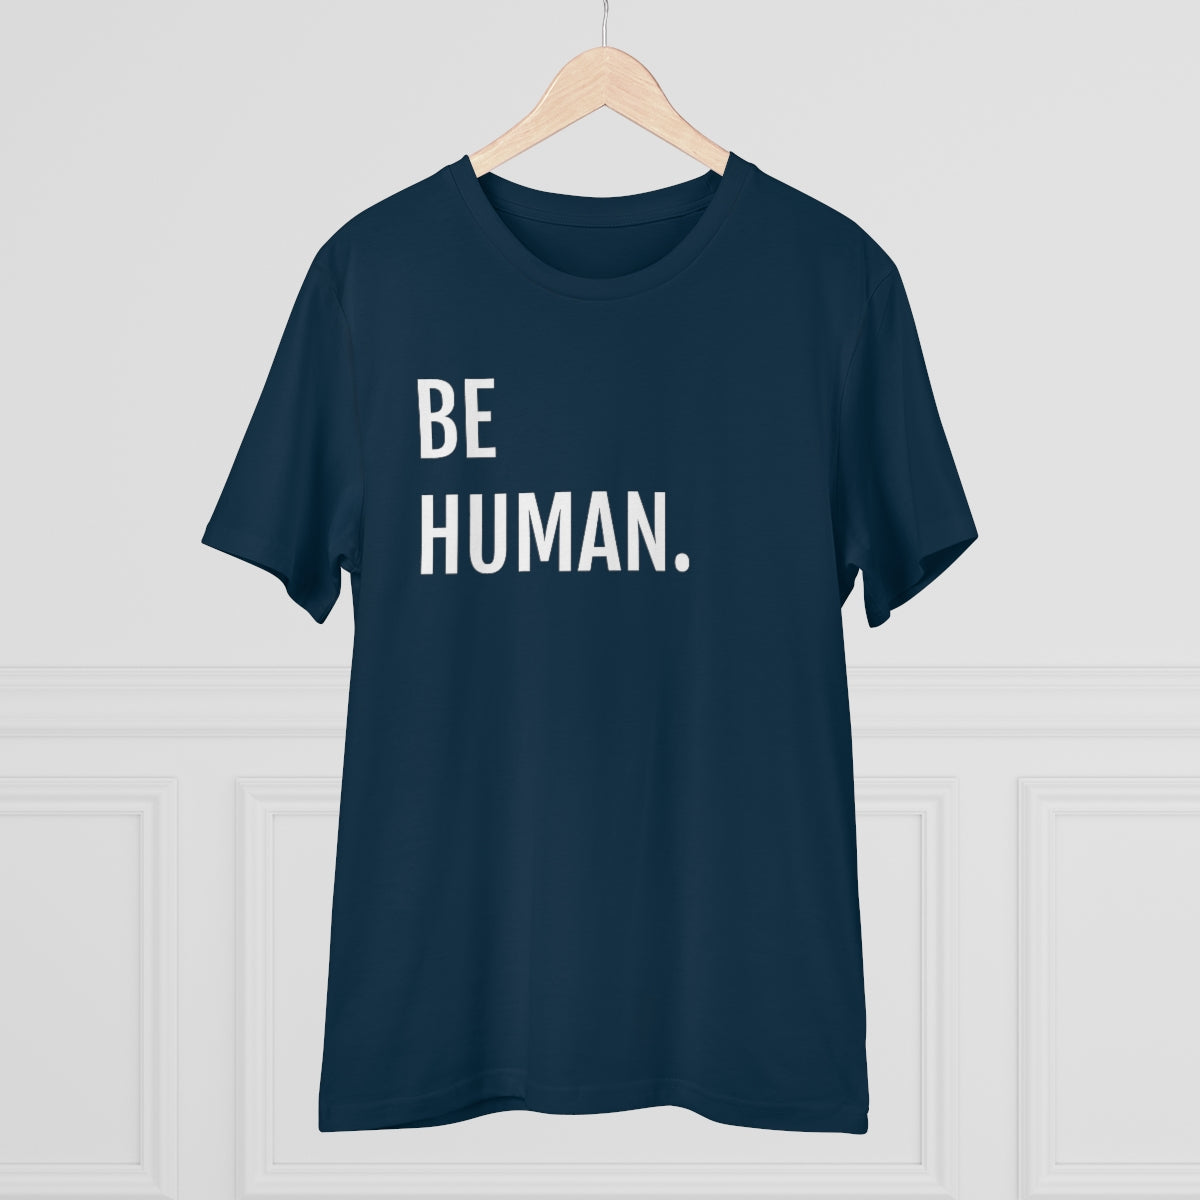 BE HUMAN. - Organic Creator T-shirt - Unisex